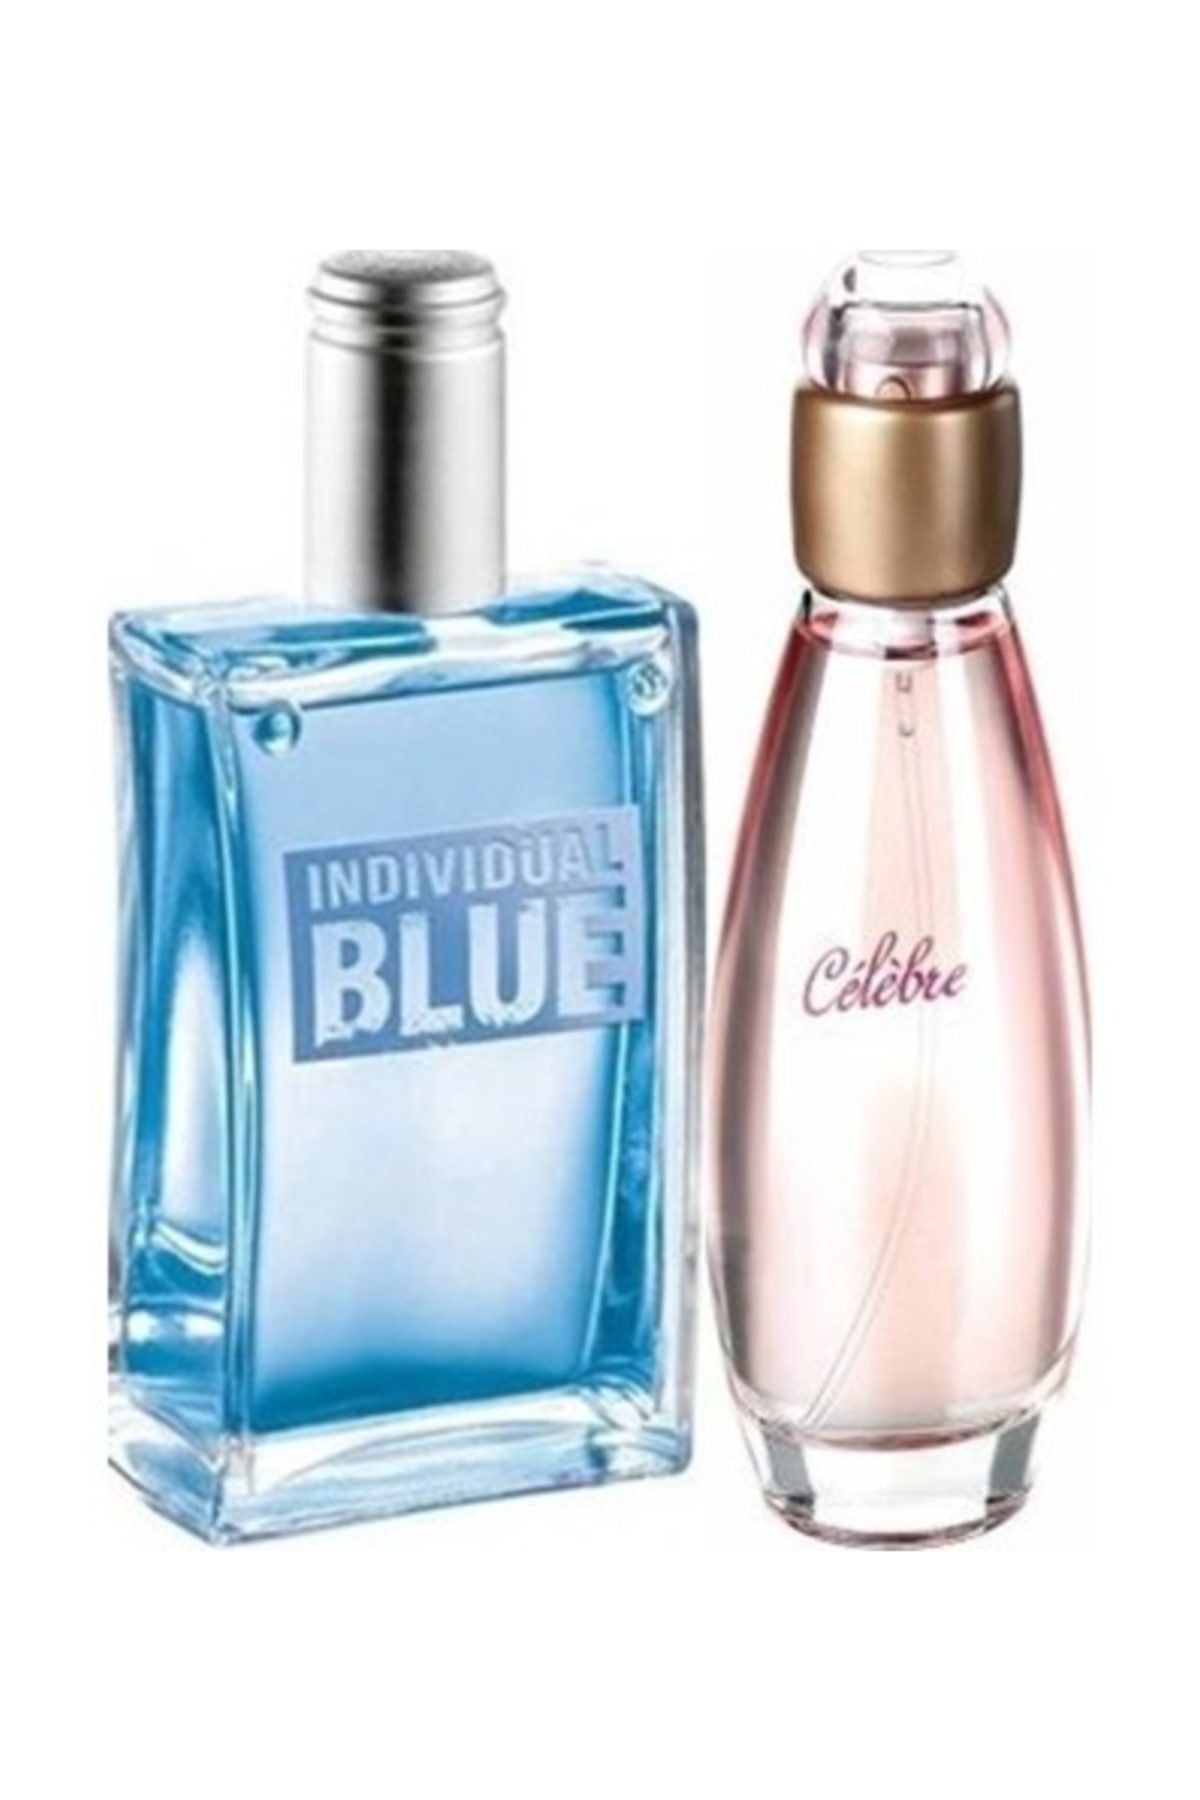 Avon Celebre Edt 50 Ml Kadın Parfüm Ve Individual Blue Edt 100 Ml Erkek Parfüm 2 Li Set